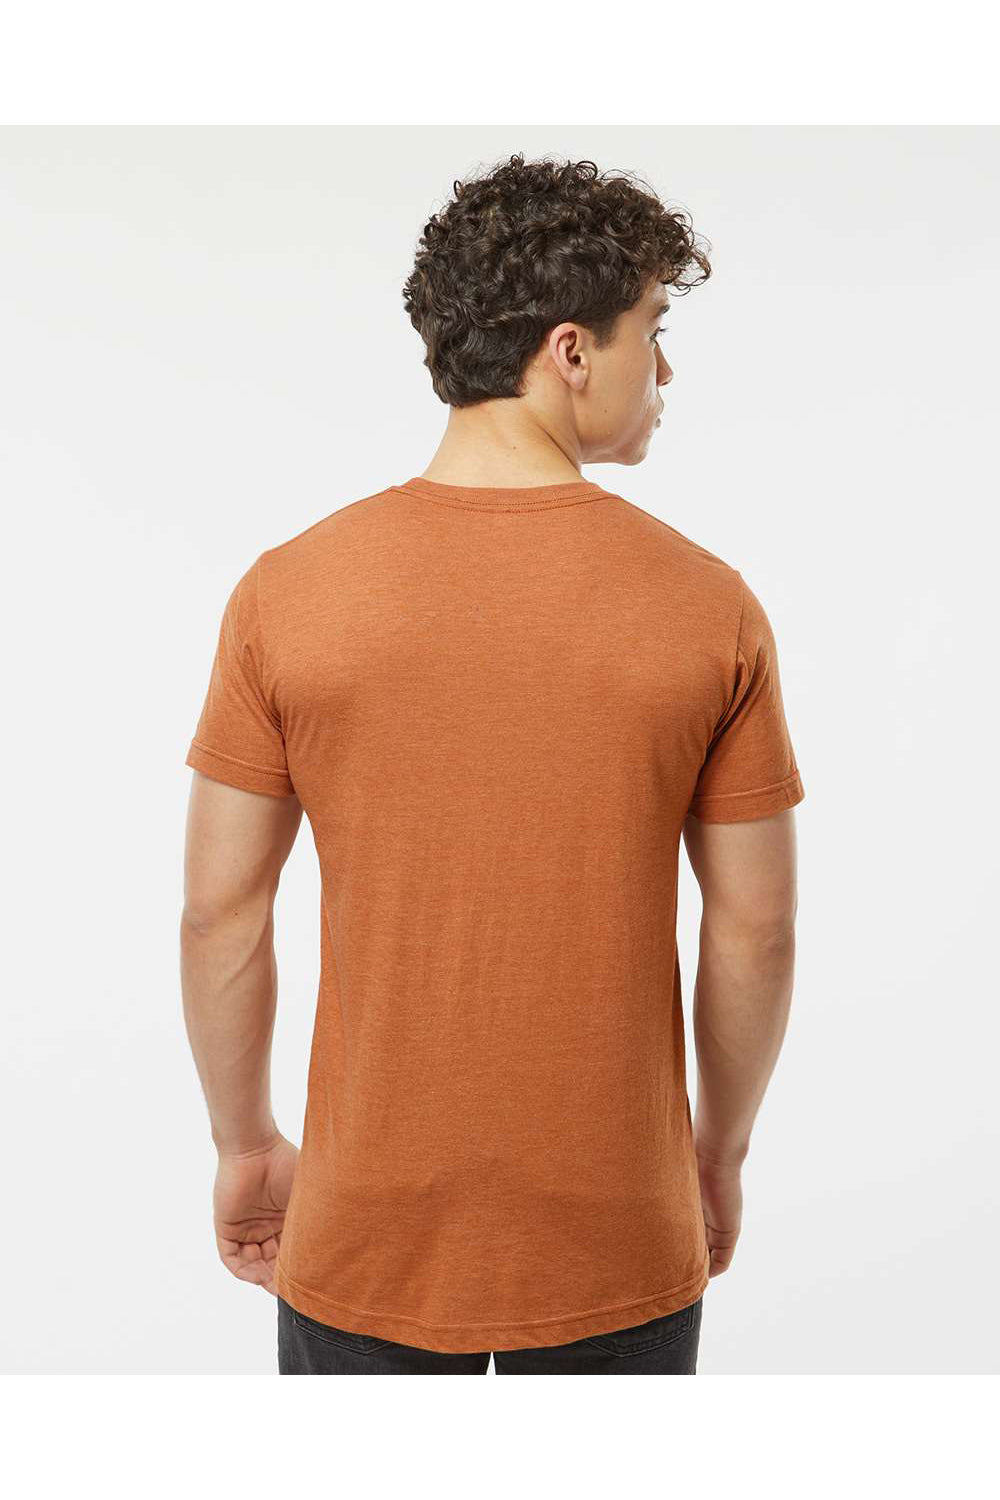 Tultex 202 Mens Fine Jersey Short Sleeve Crewneck T-Shirt Heather Rust Orange Model Back